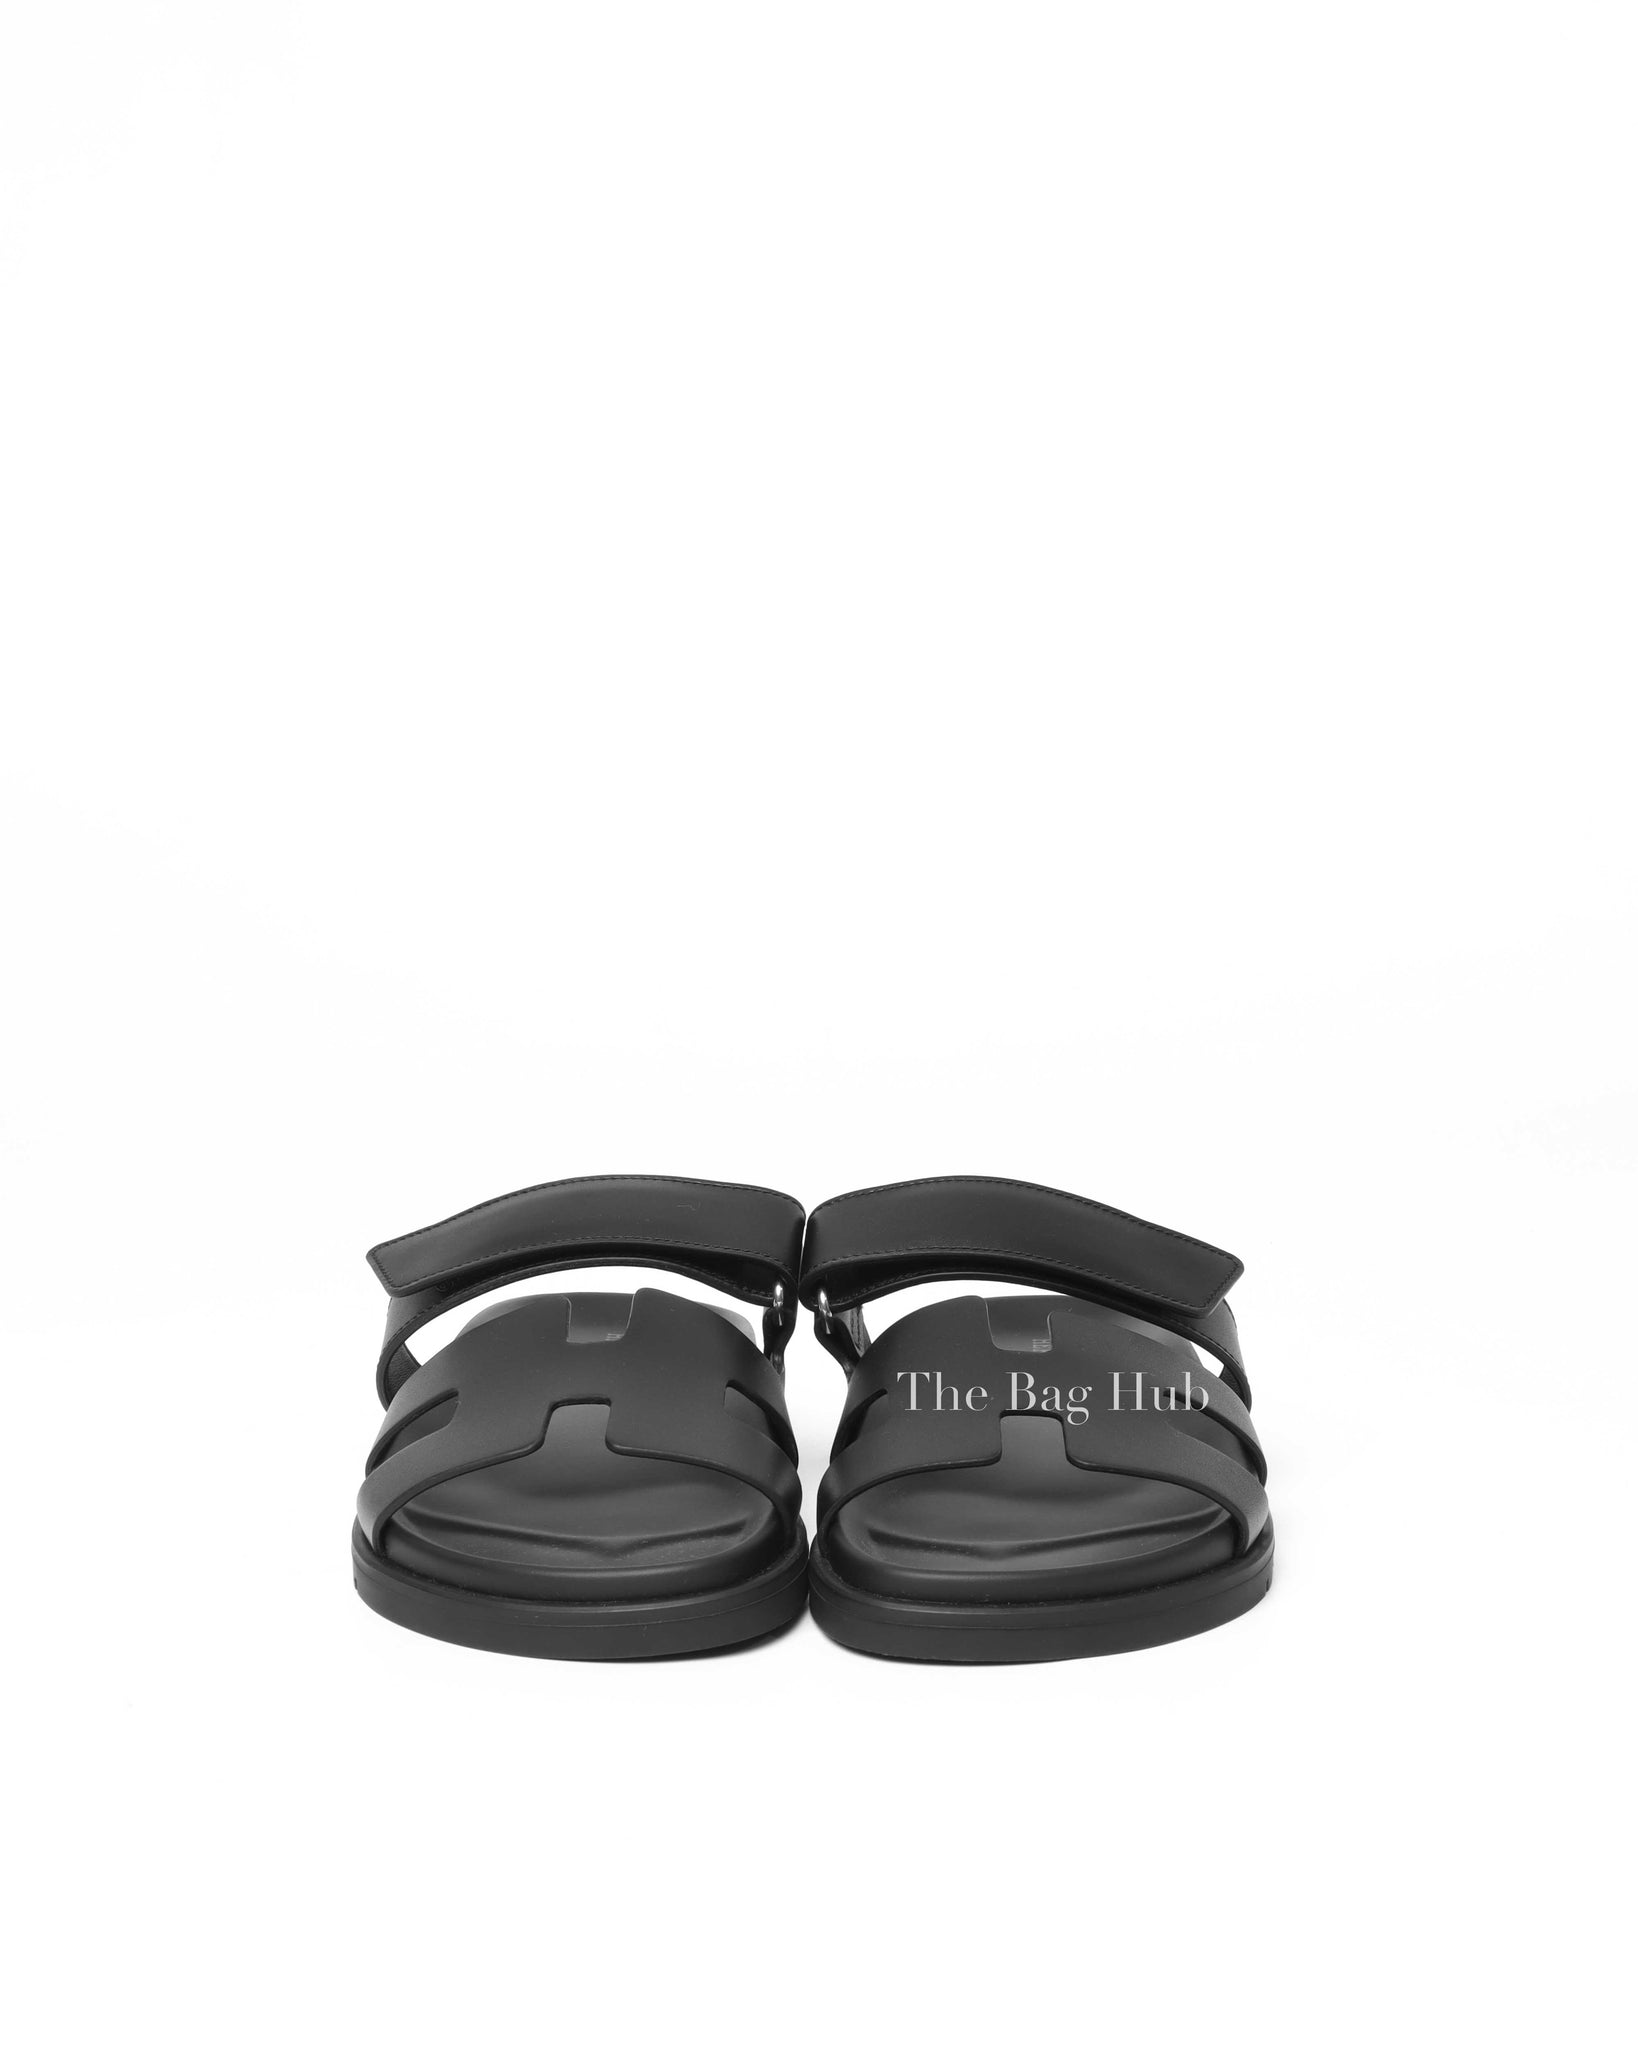 Hermes Black Chypre Sandals Size 36.5